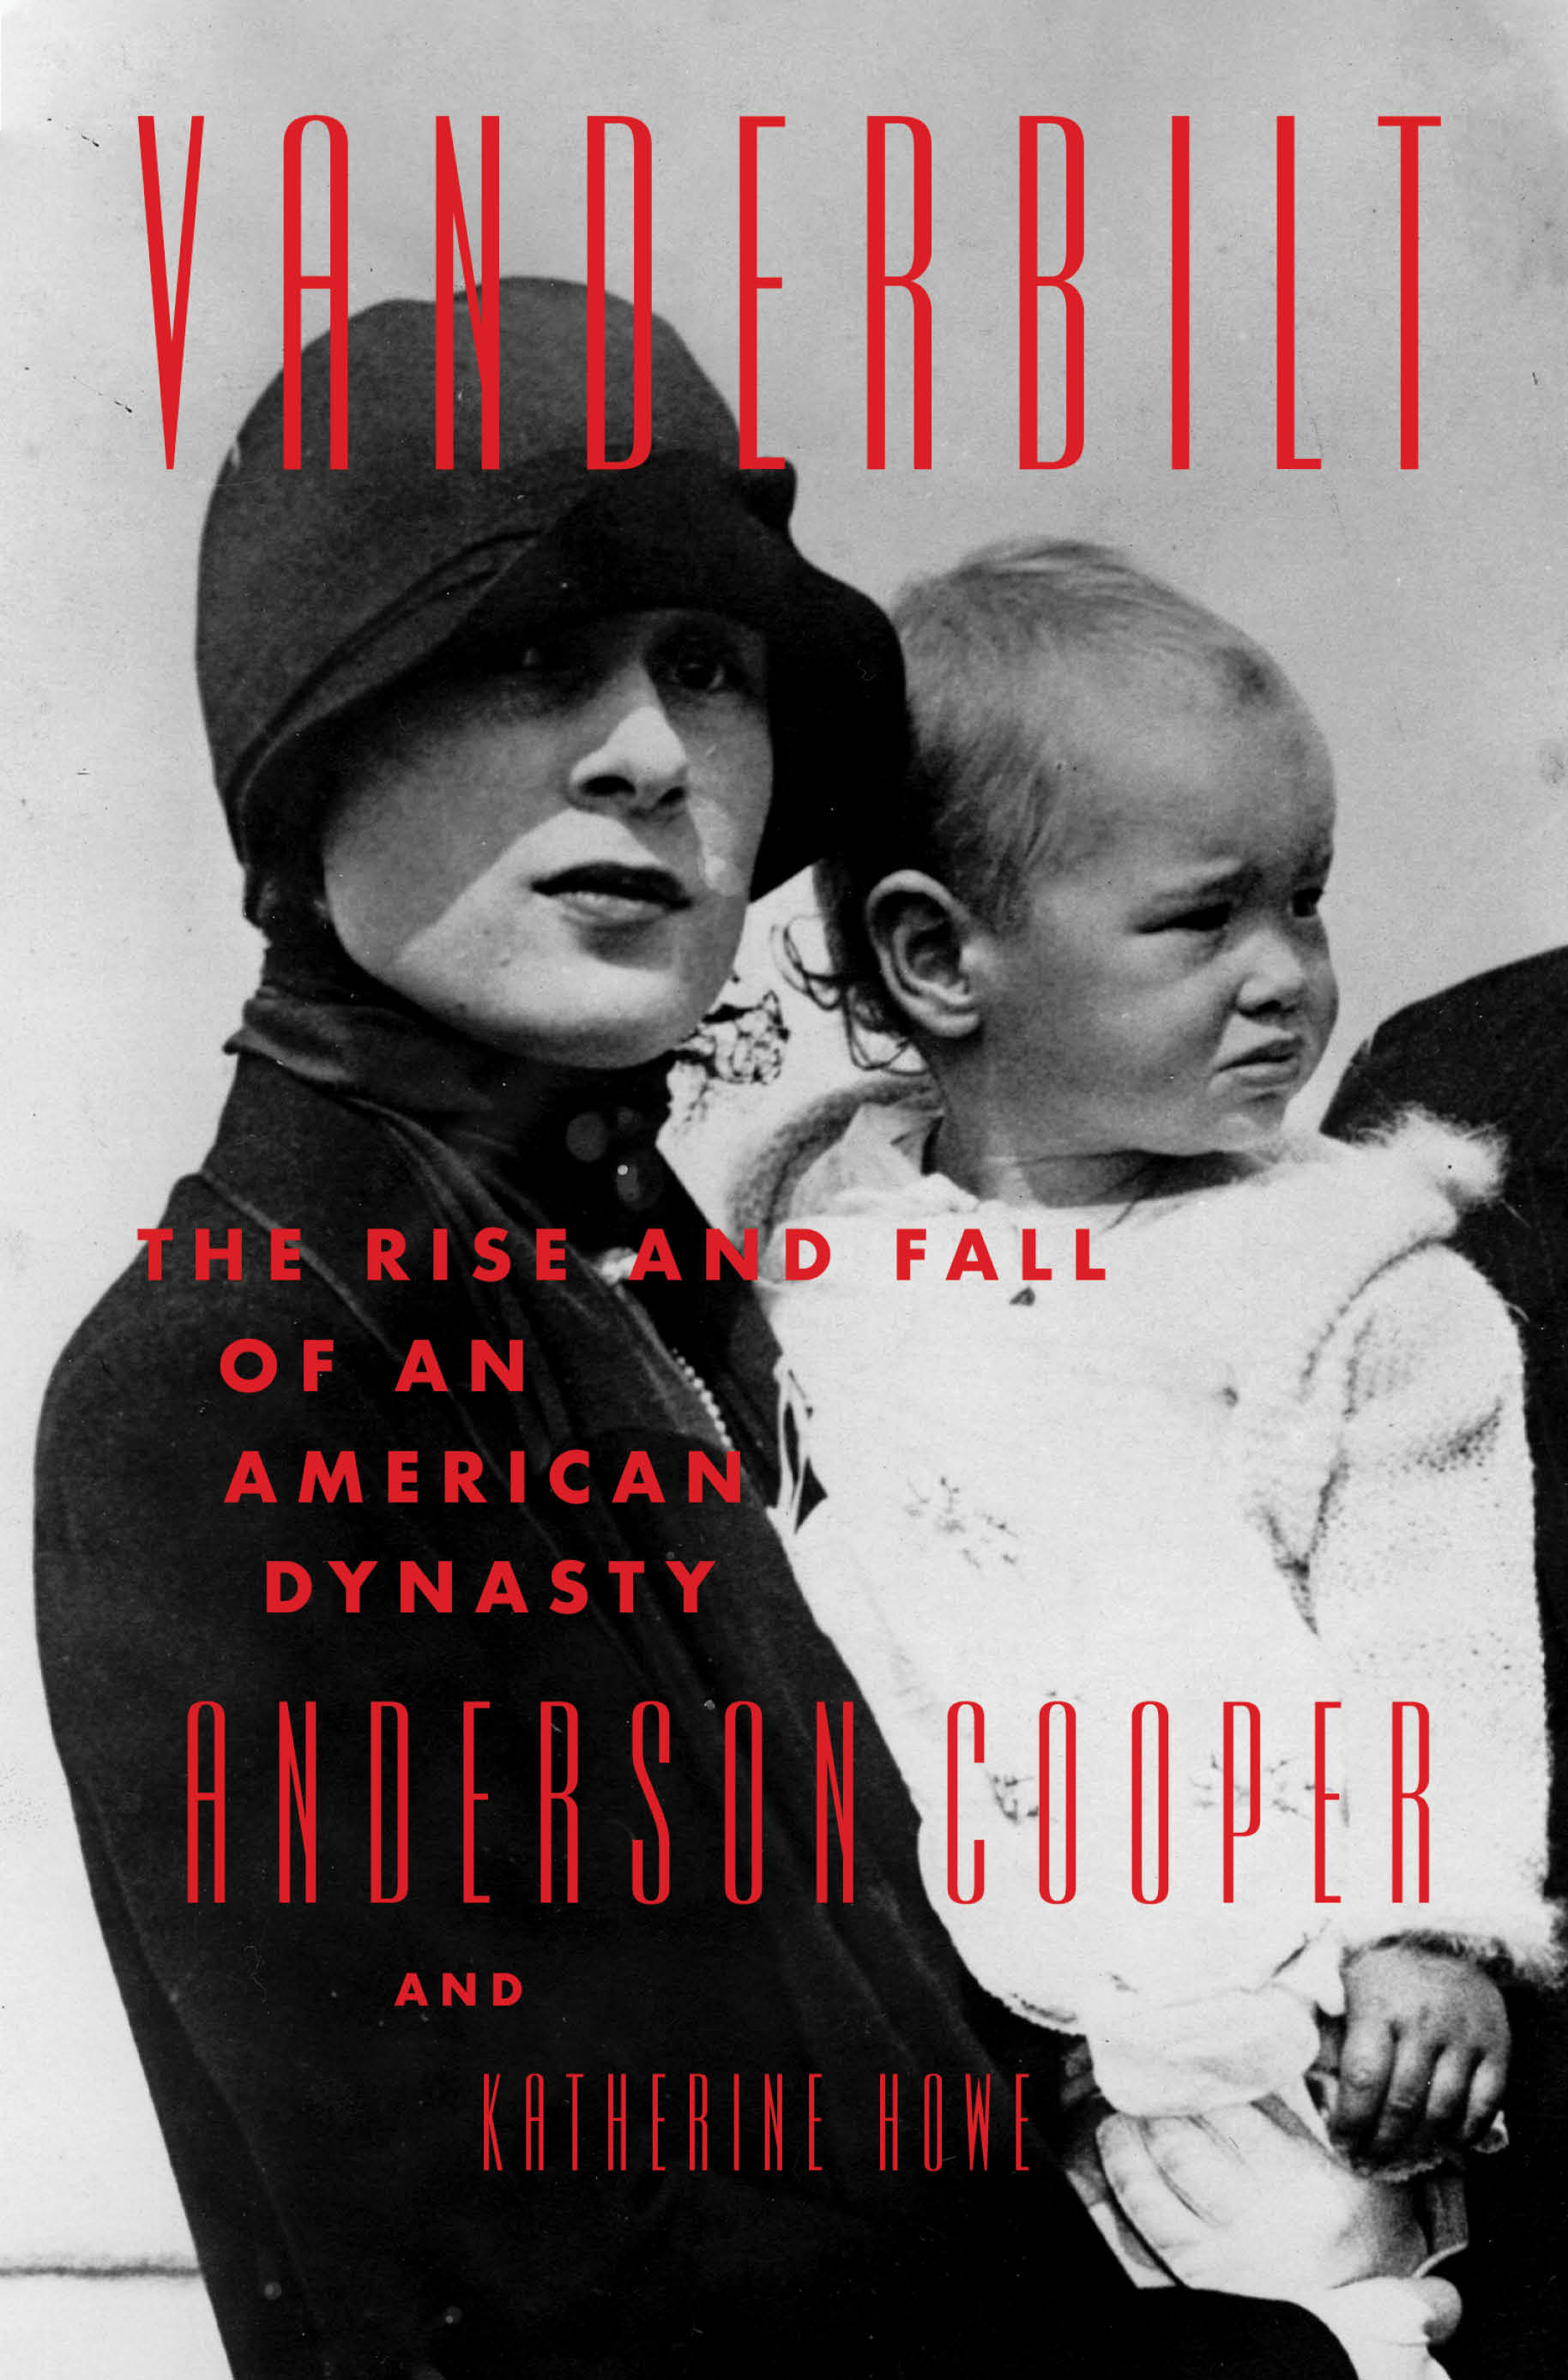 Virtual event with Anderson Cooper/Vanderbilt